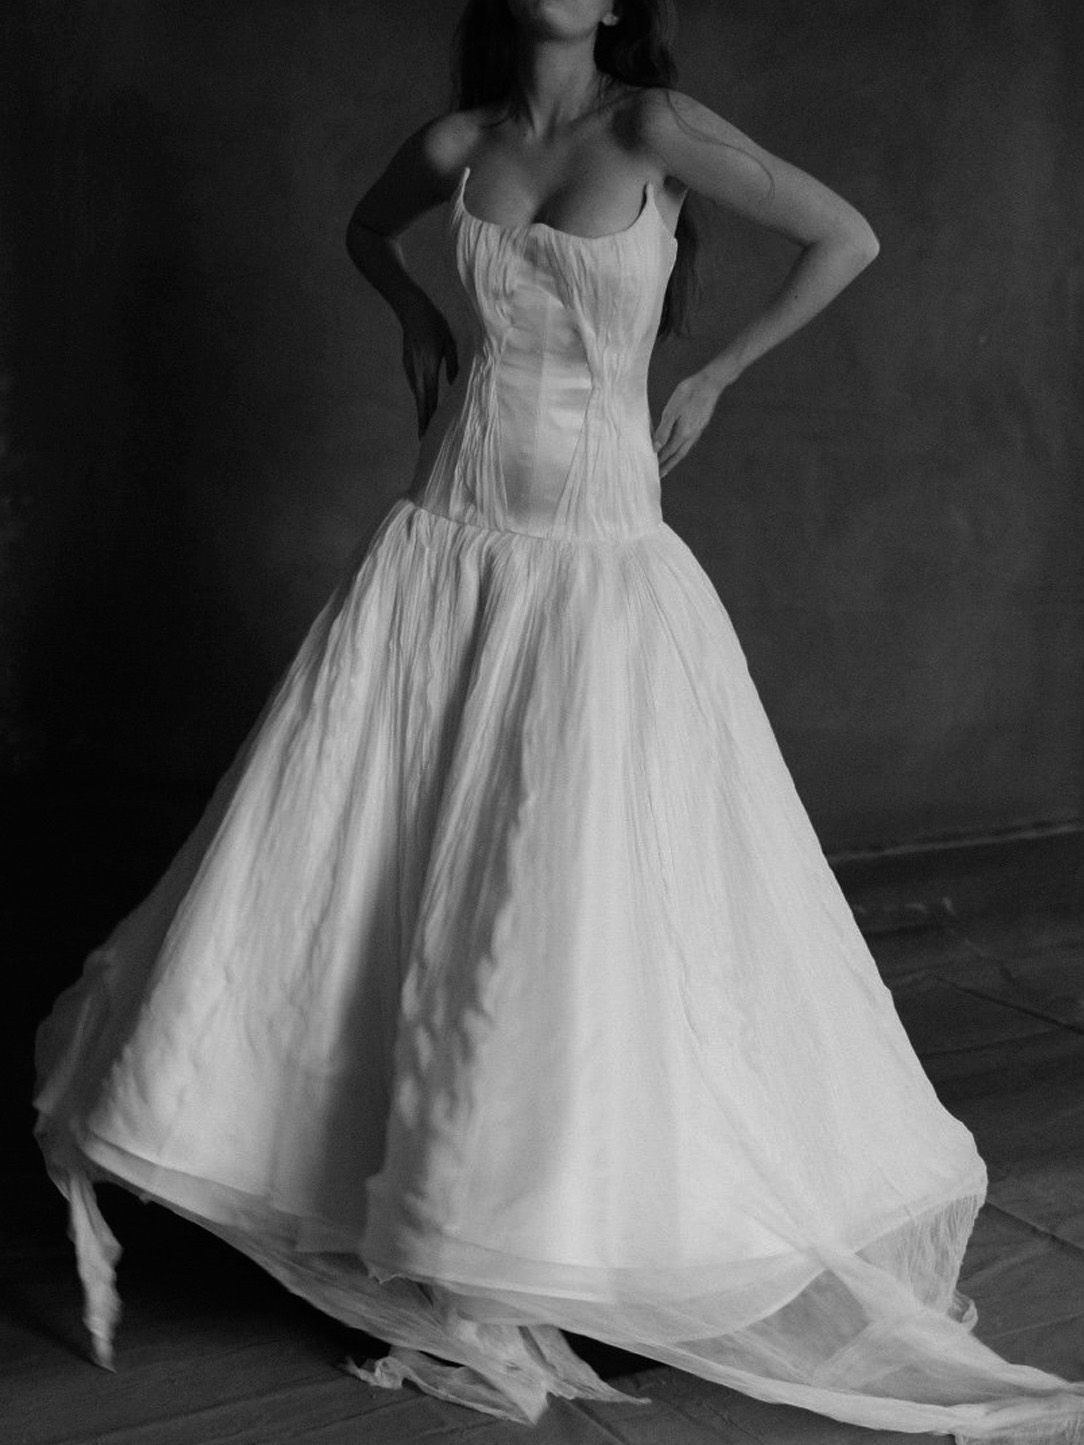 corset wedding dresses